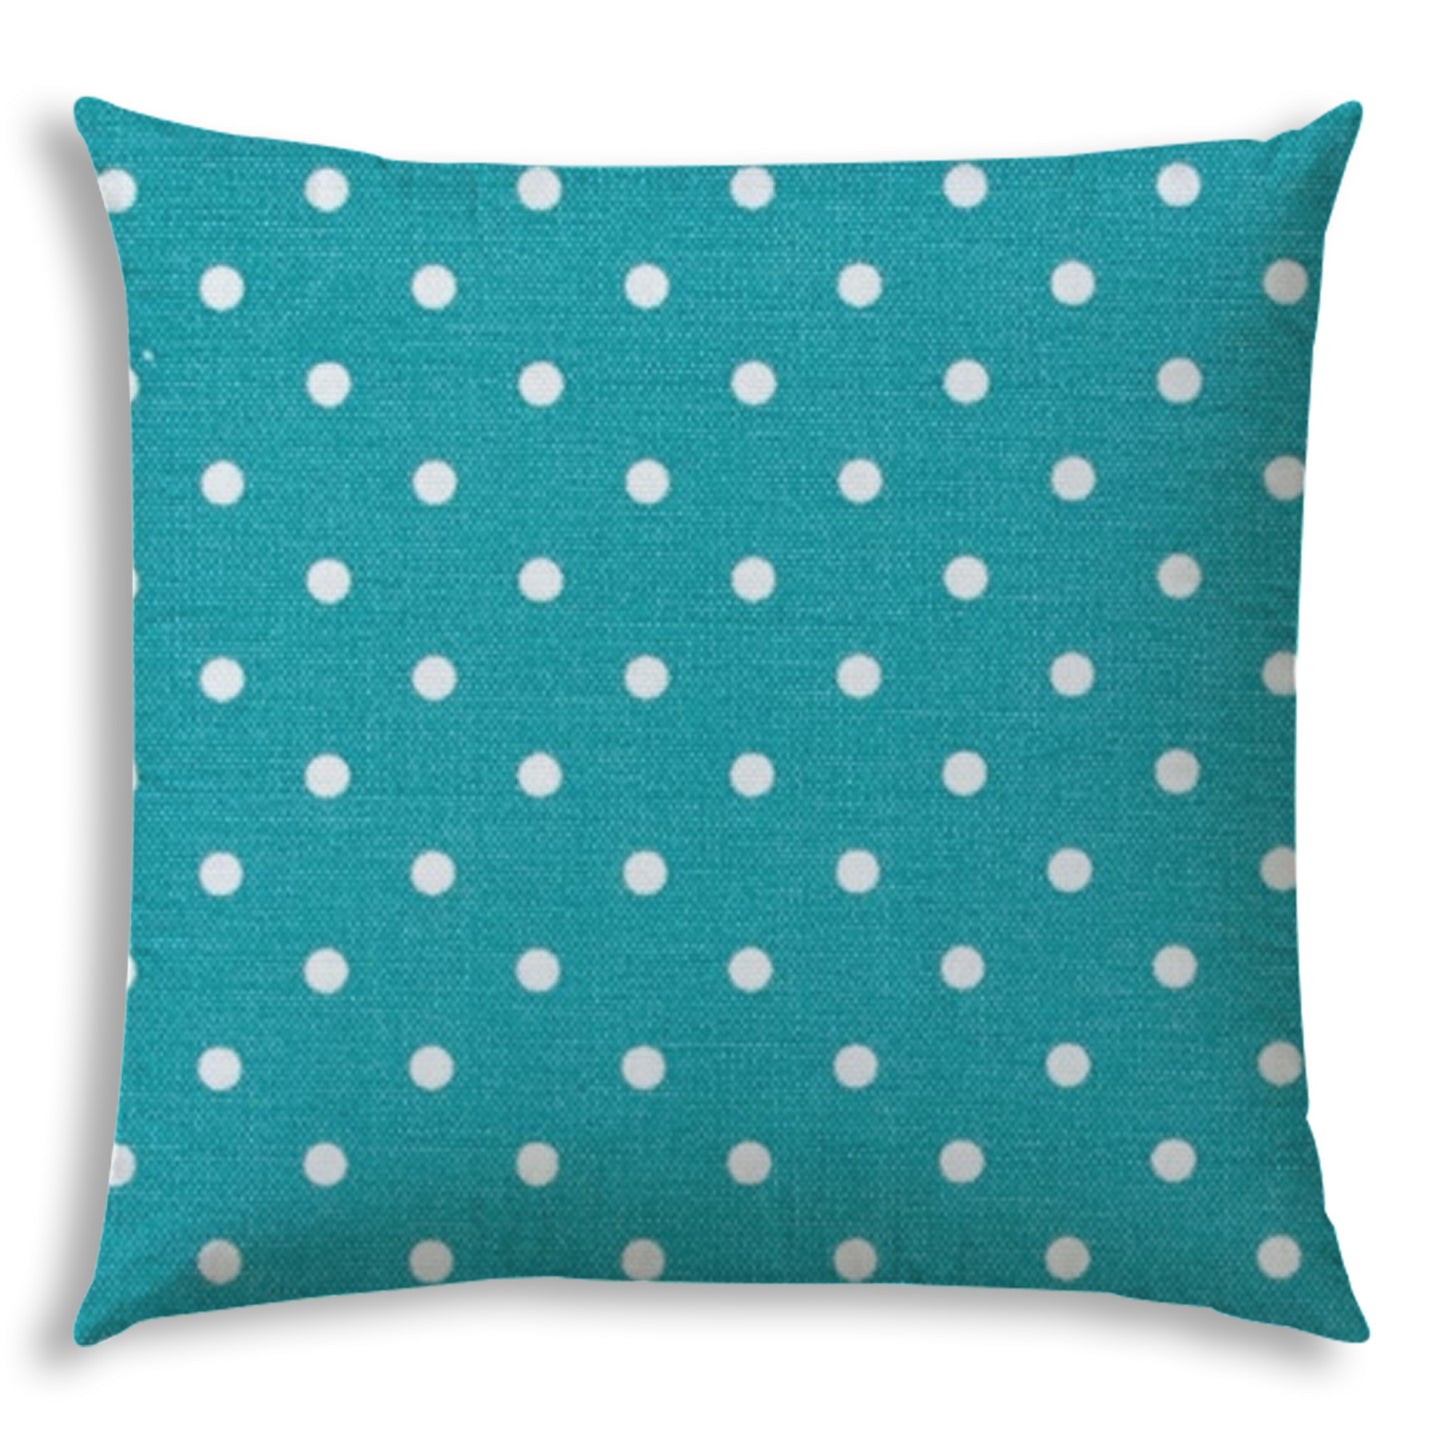 20" X 20" Turquoise Blown Seam Polka Dots Throw Indoor Outdoor Pillow